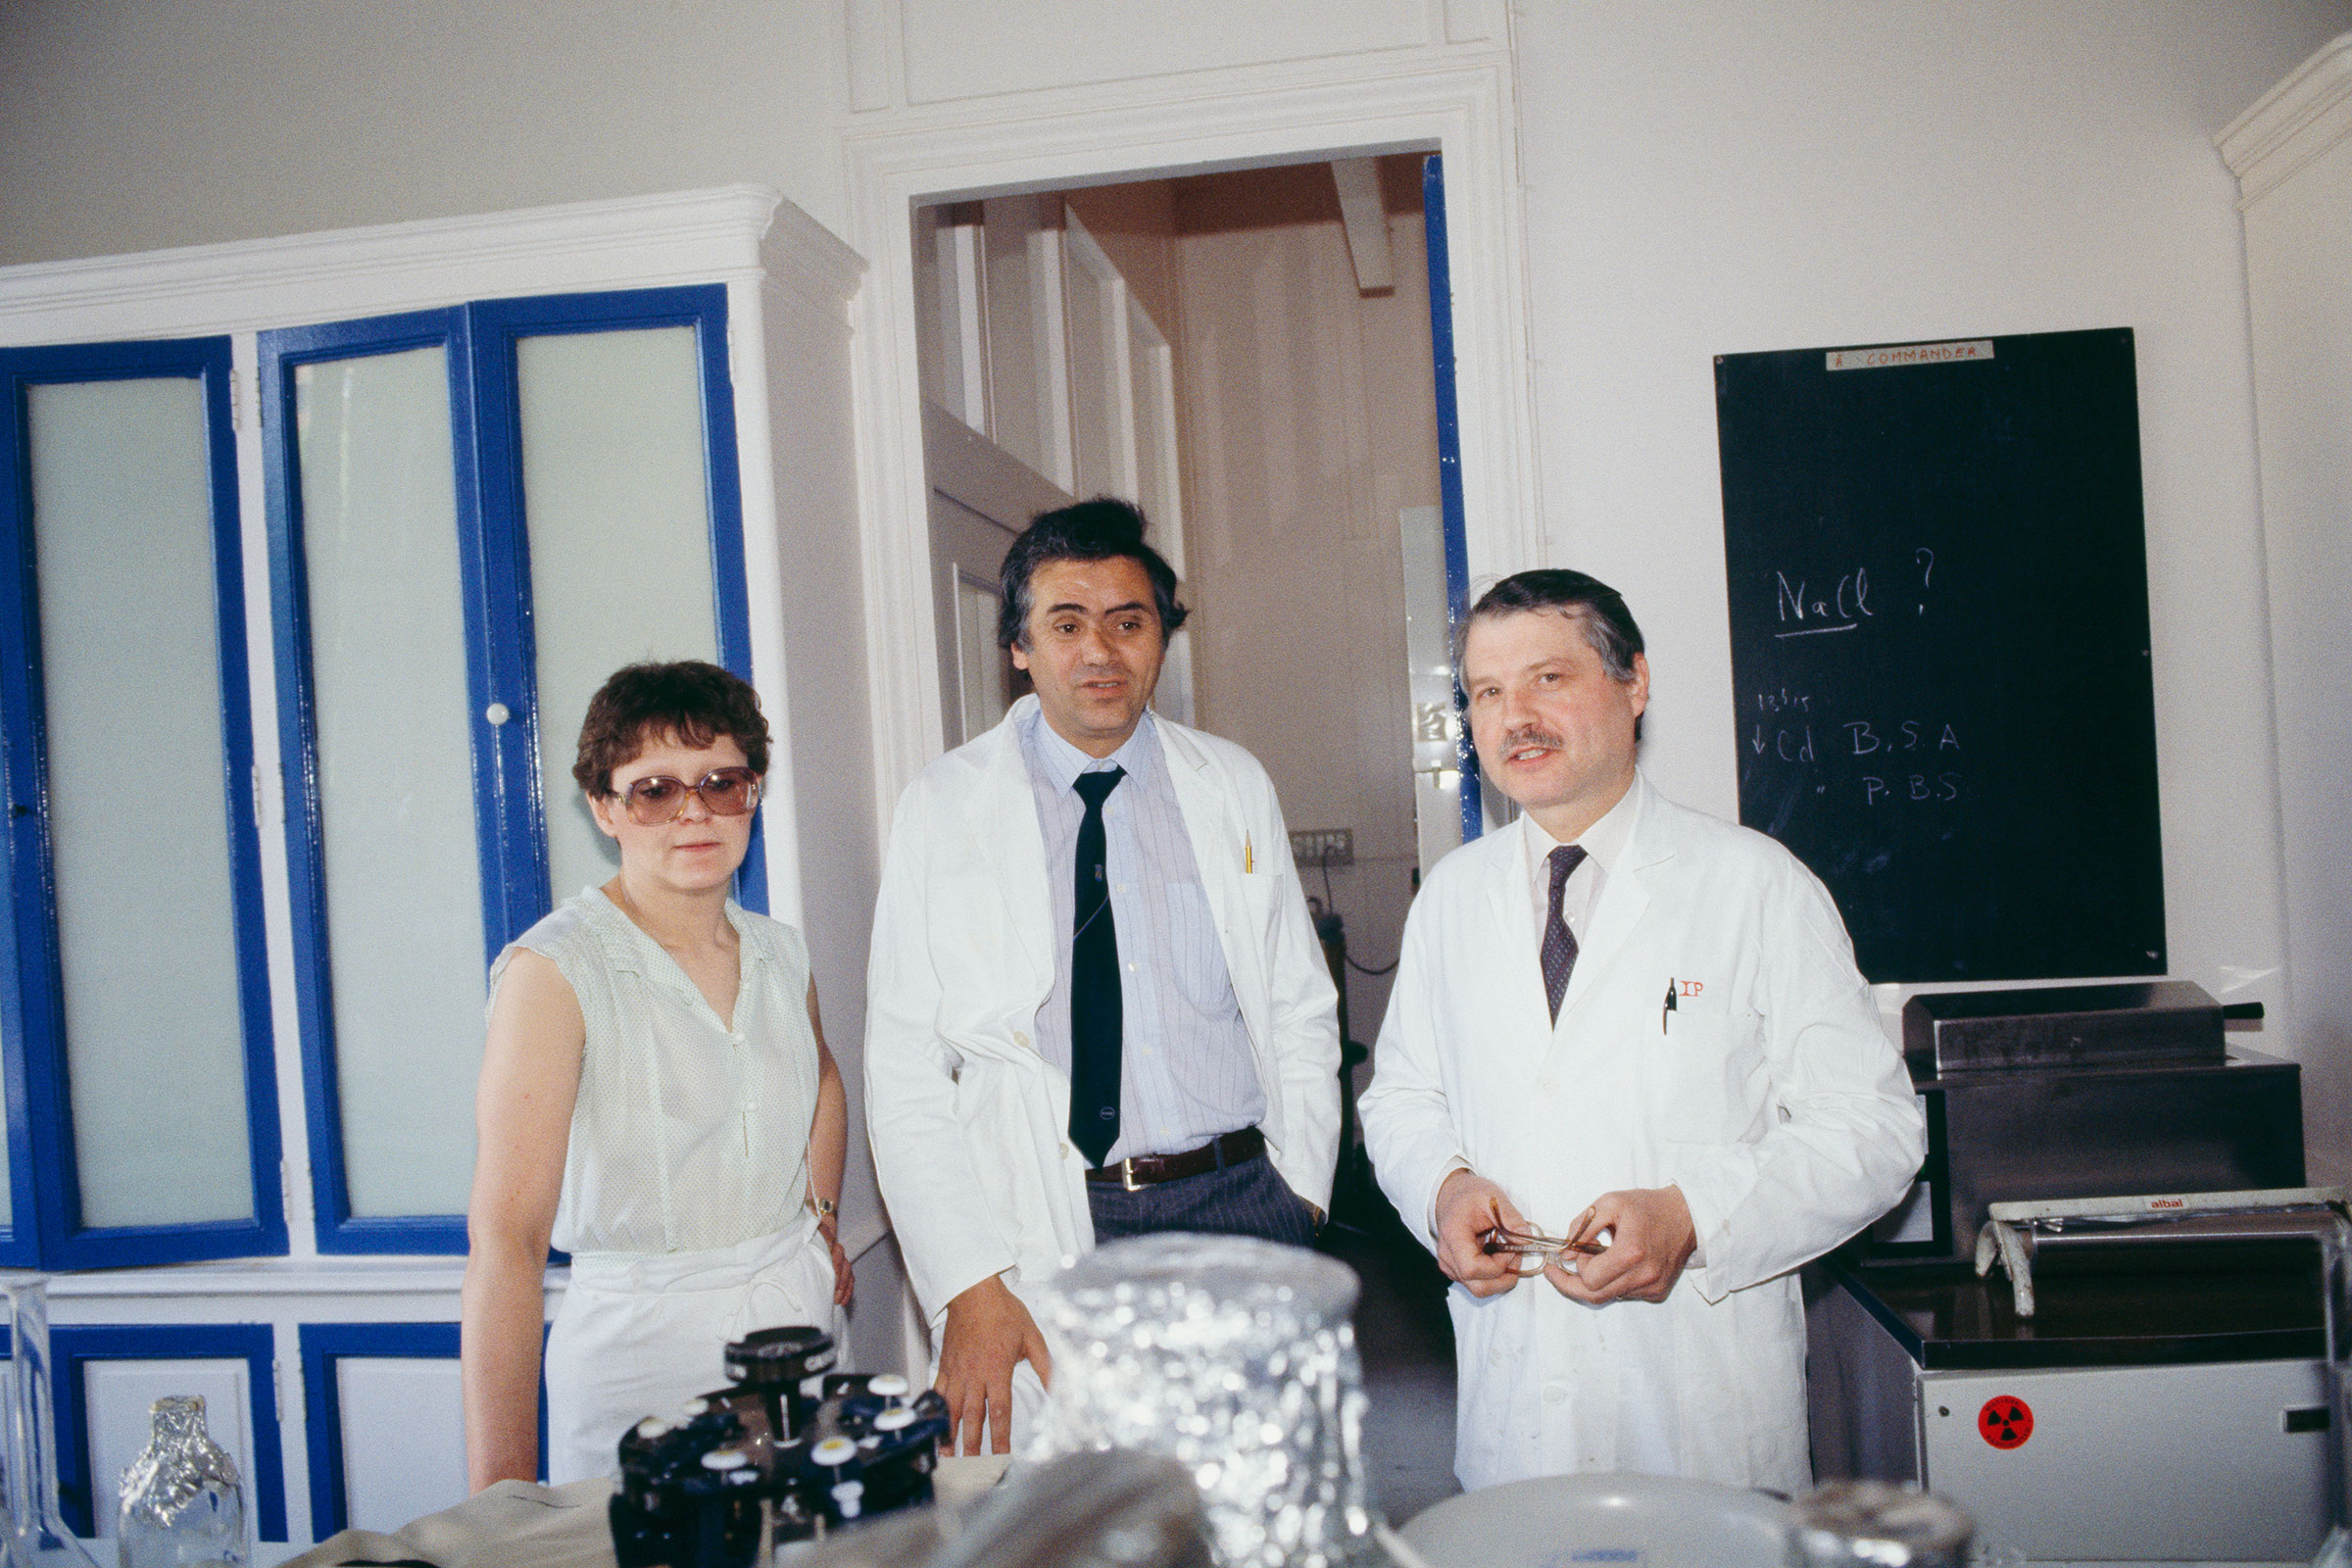 Barré-Sinoussi, Jean-Claude Chermann and Montagnier at the Pasteur Institute. (Sygma/Getty Images)